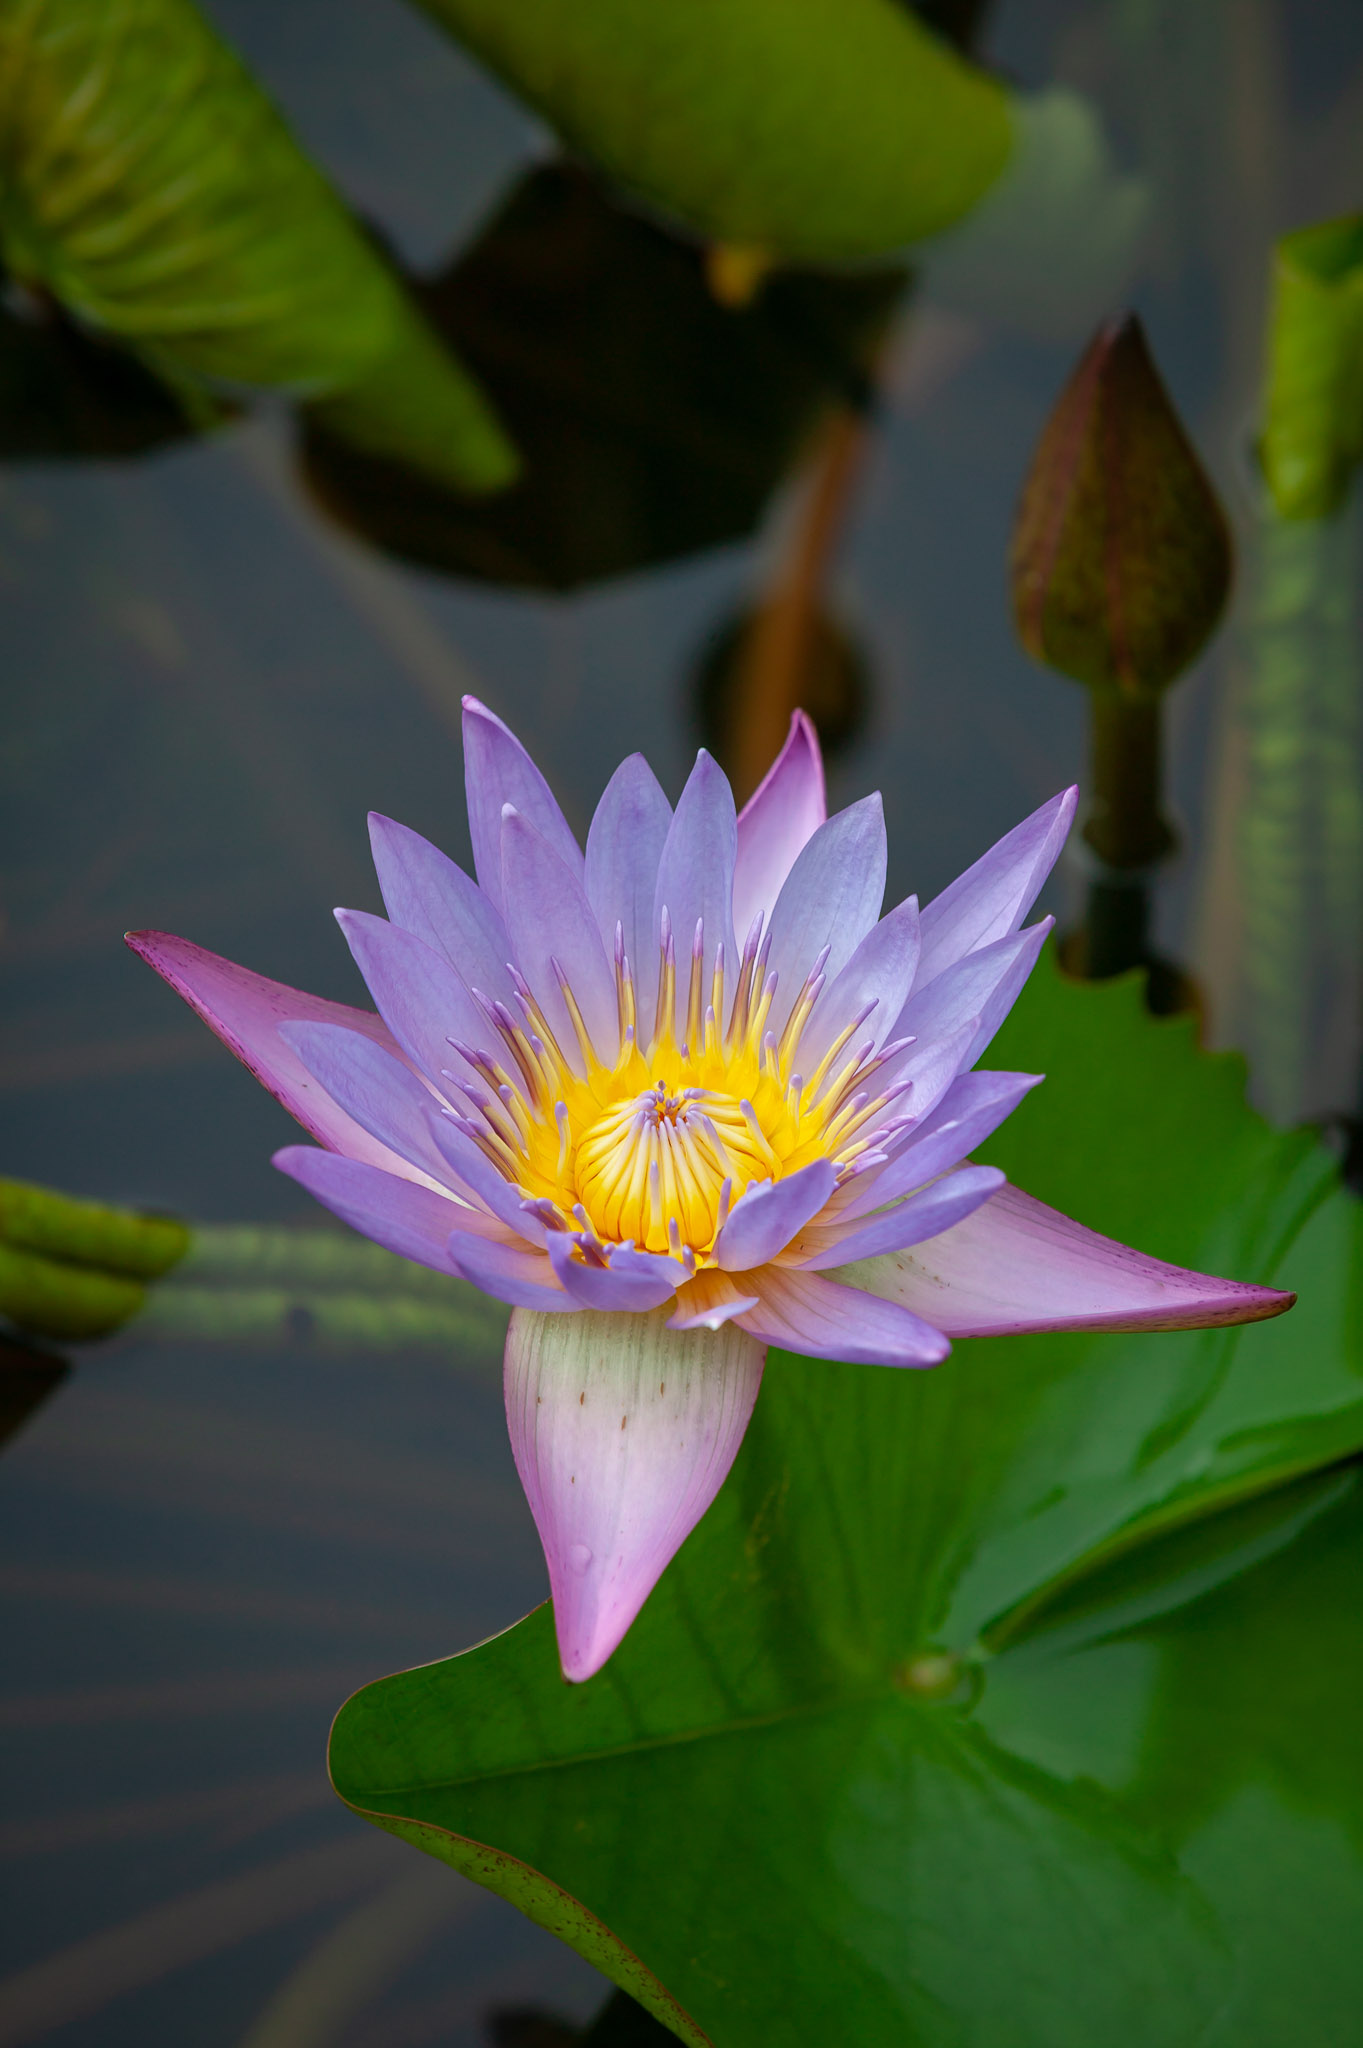 Lotus blossoms